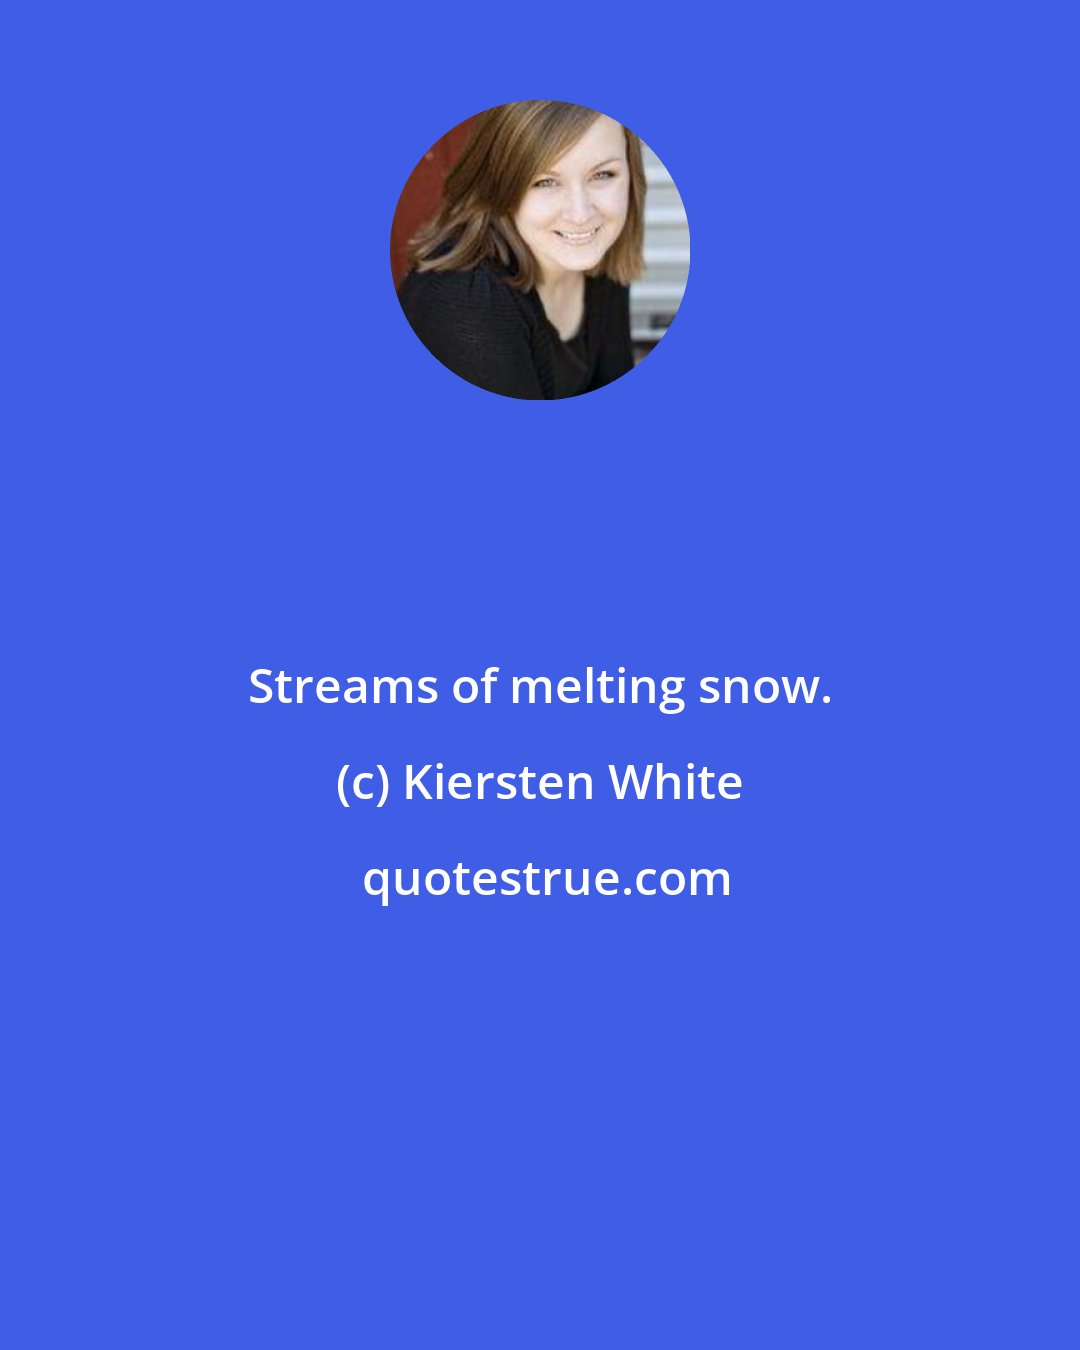 Kiersten White: Streams of melting snow.